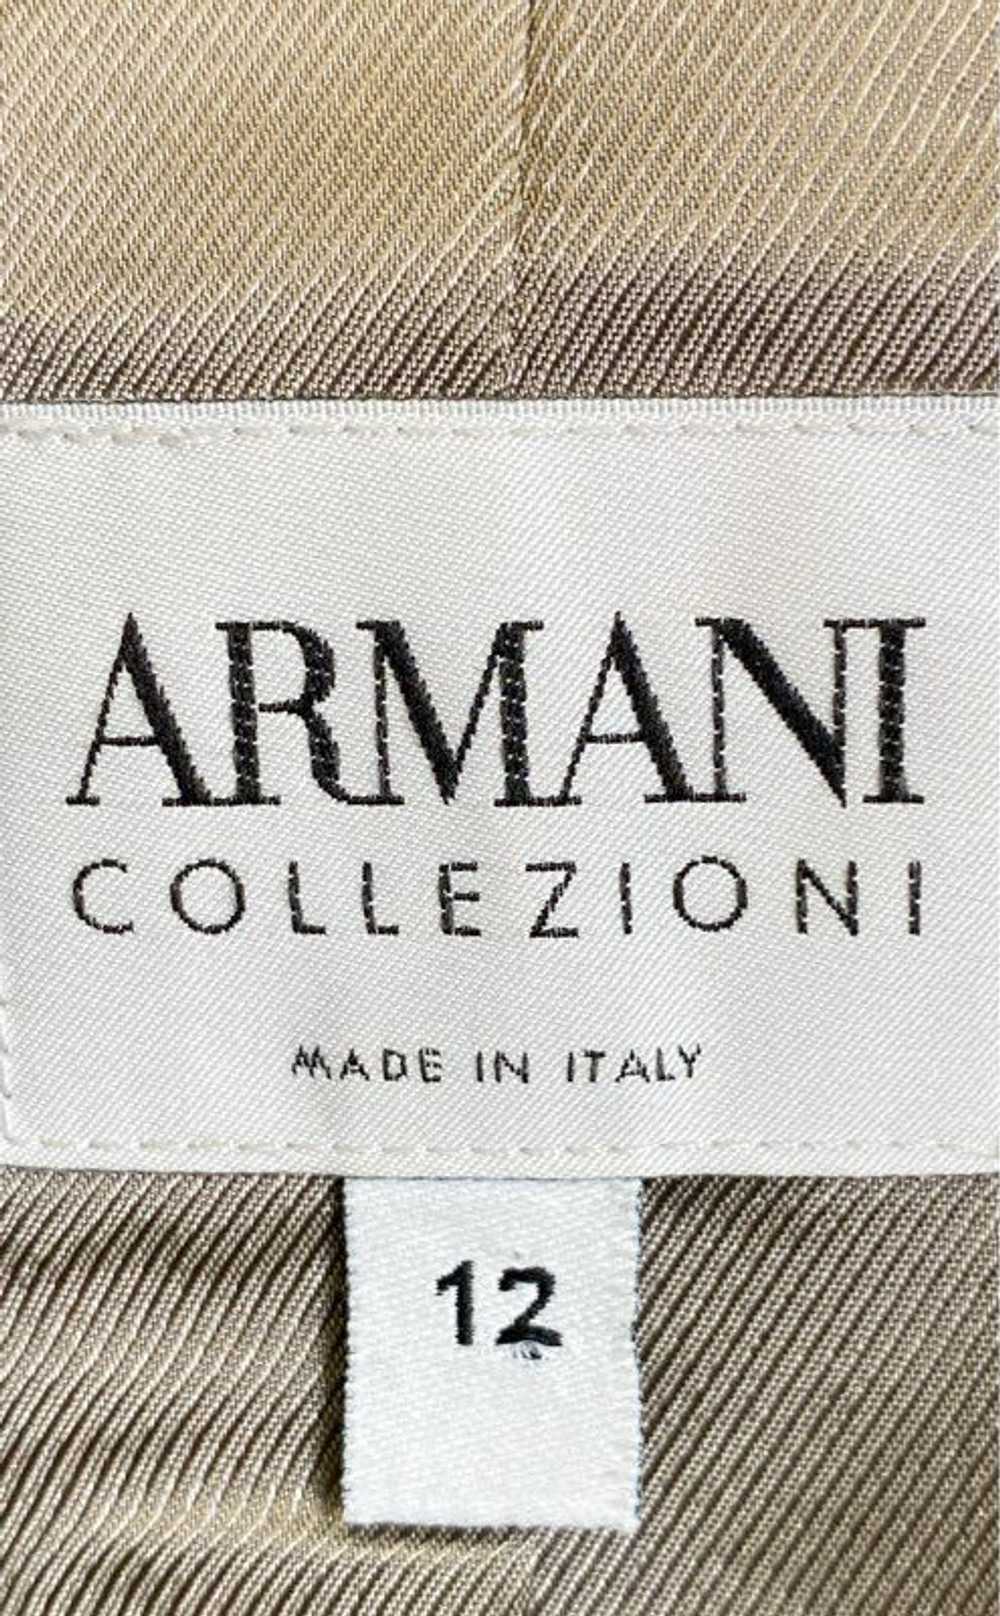 Armani Collezioni Brown Jacket - Size 12 - image 3